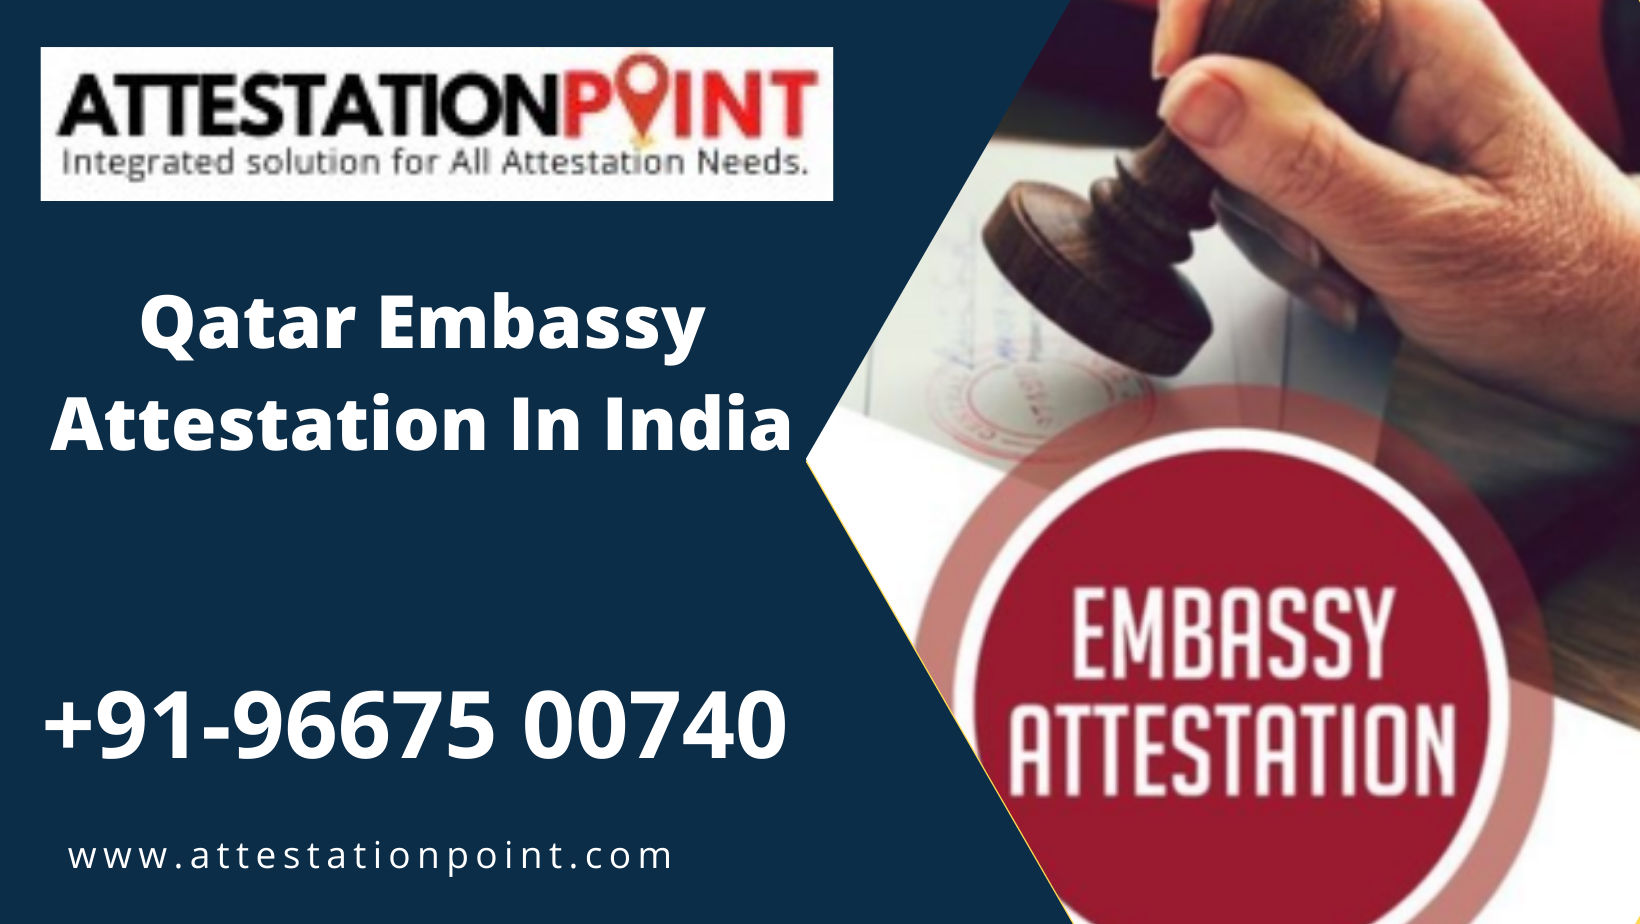 Qatar Embassy Attestation In India